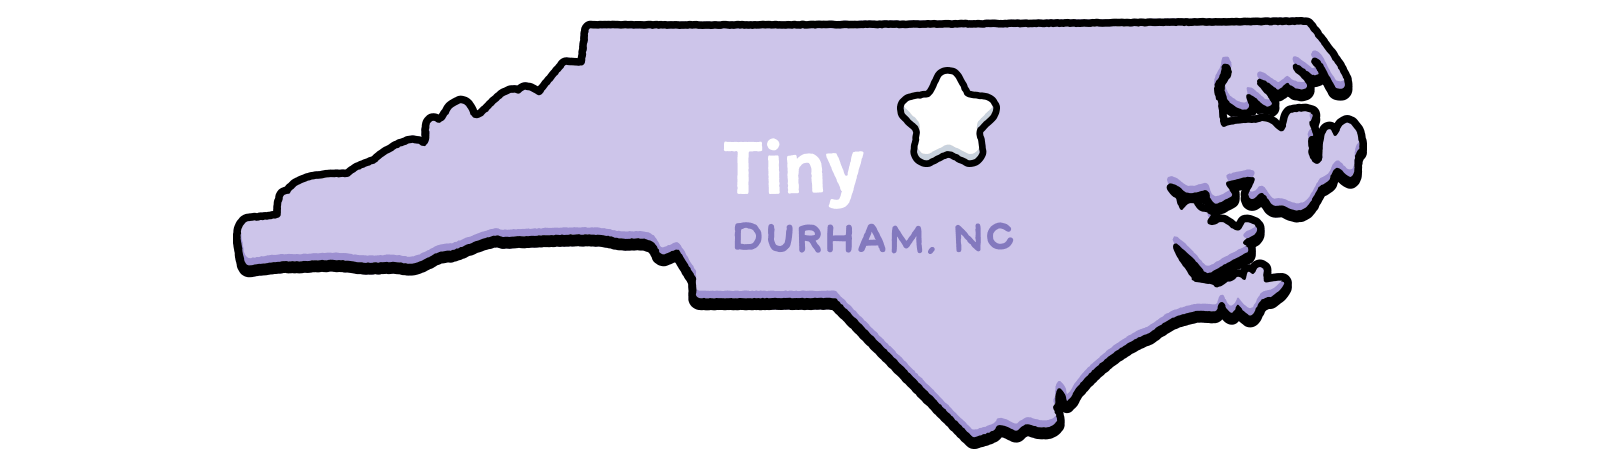 Tiny - Durham, NC